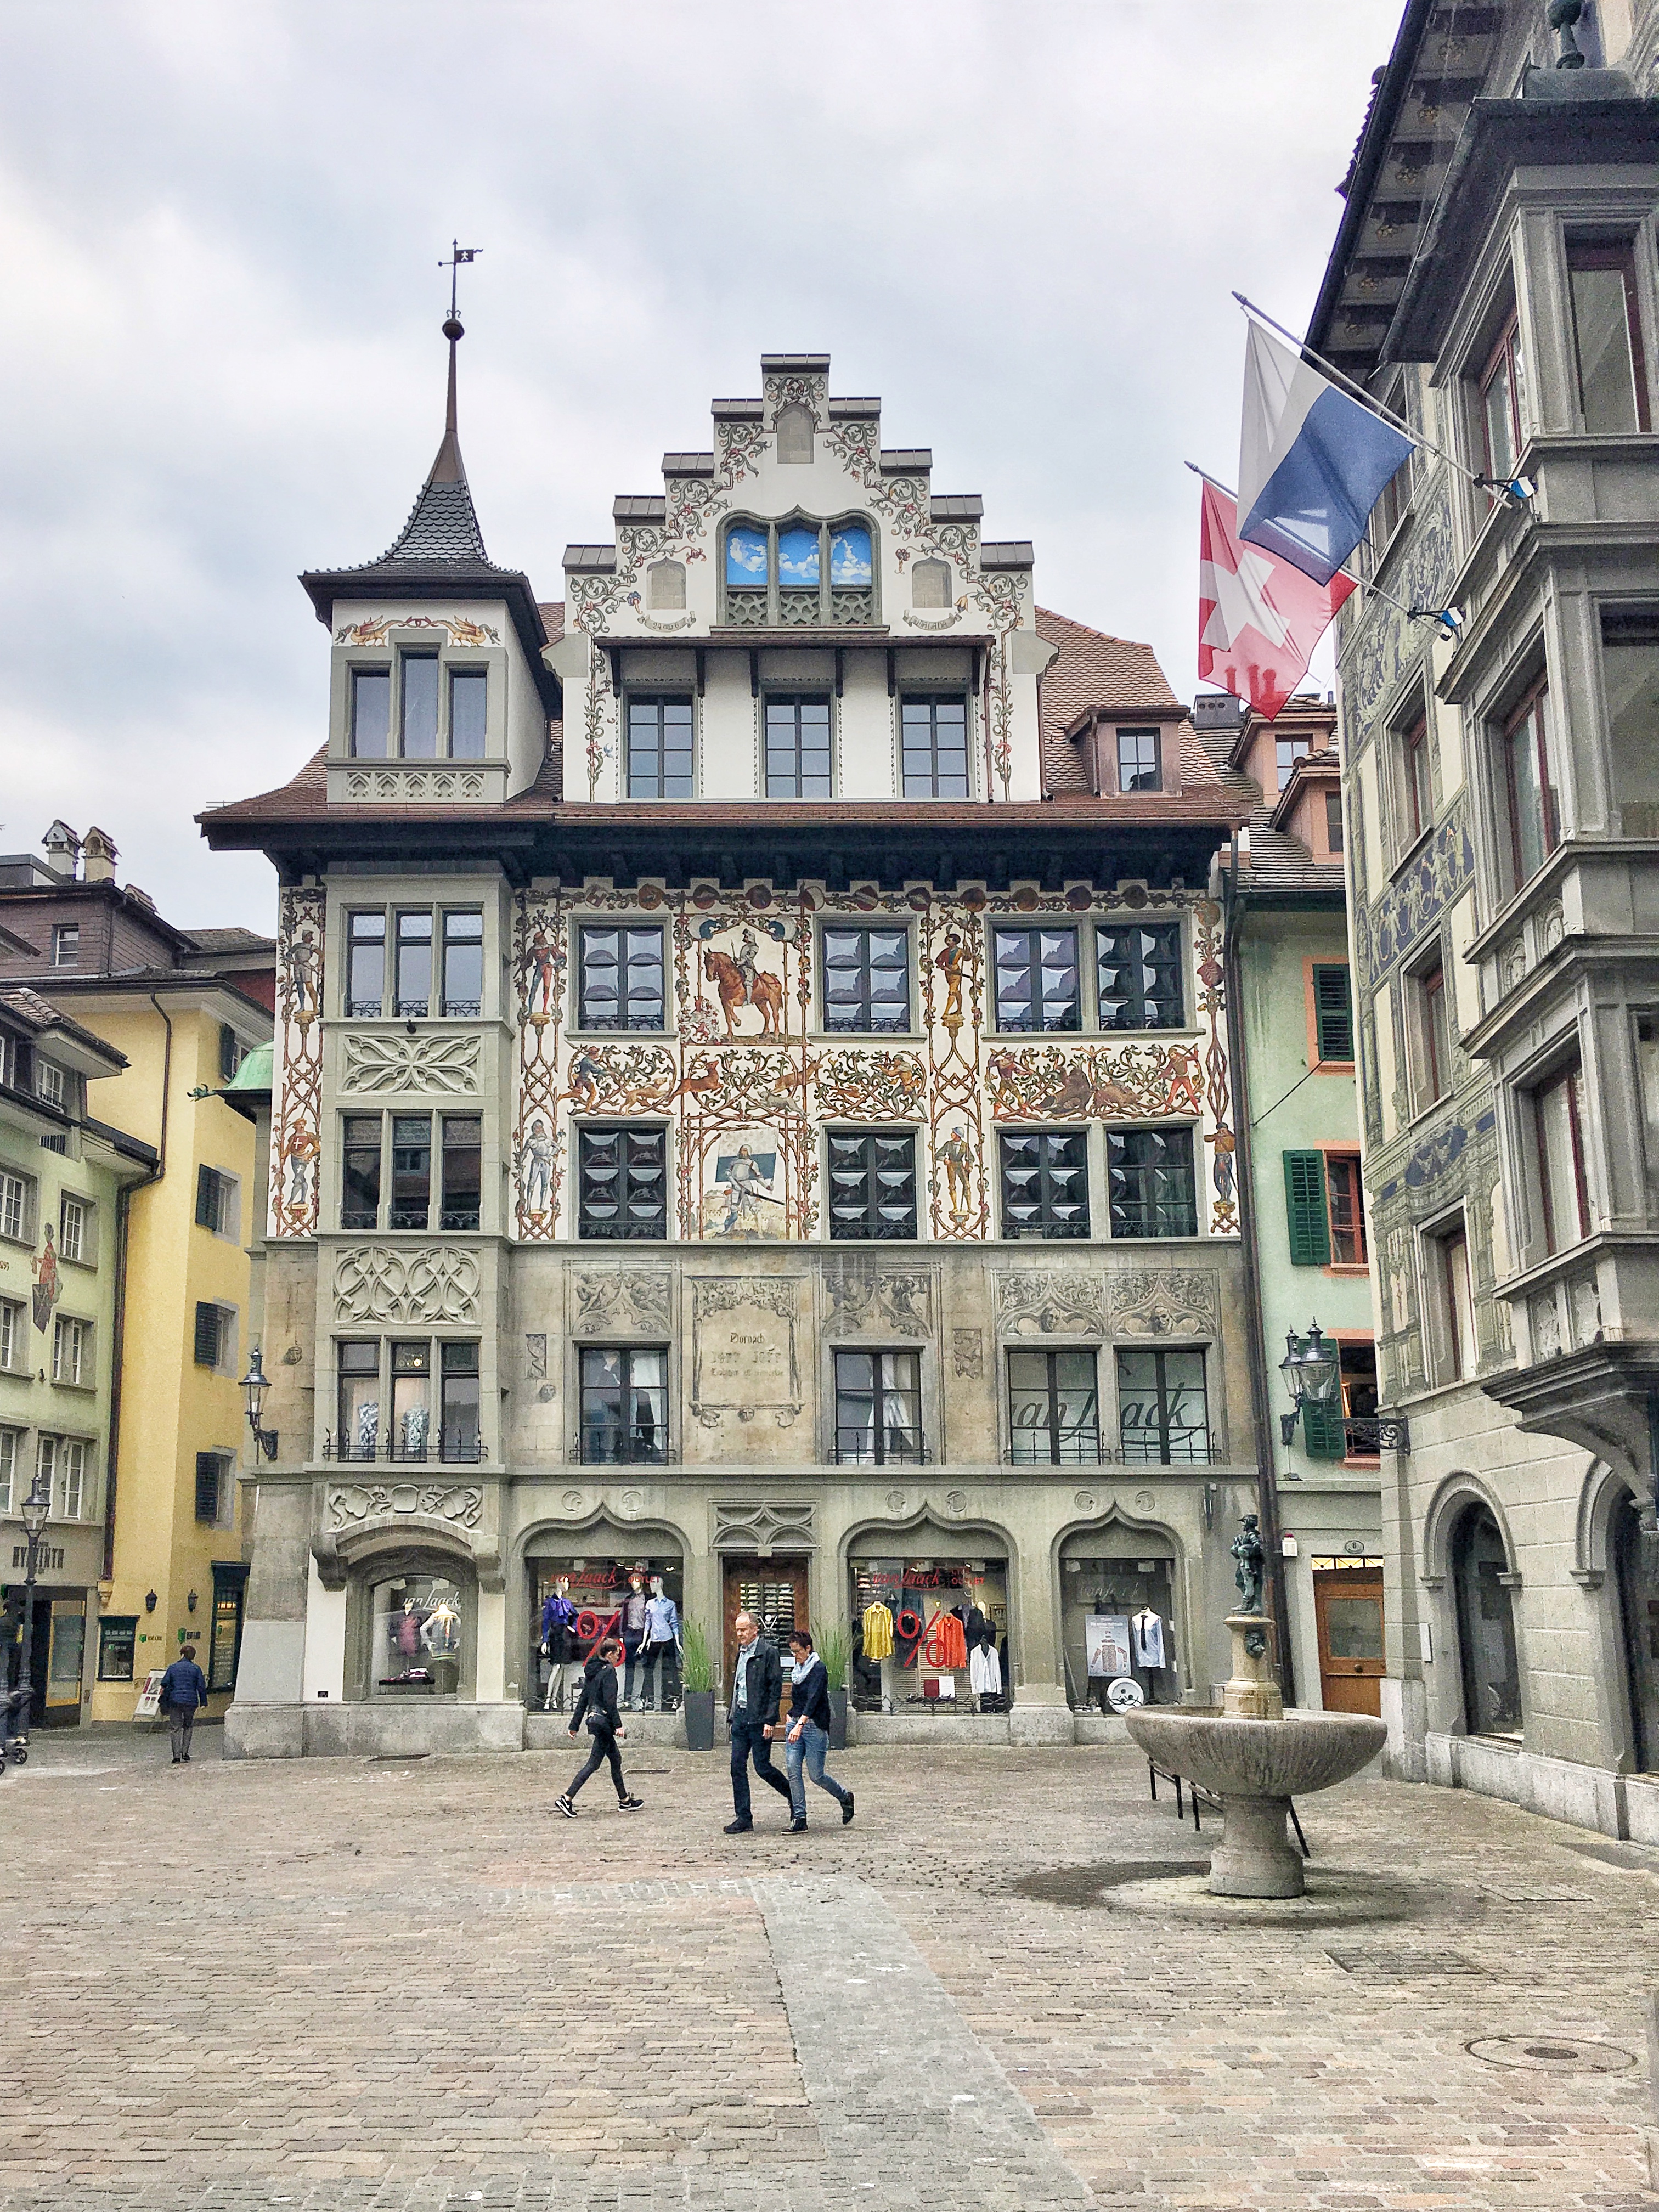 Ornate buildings in Lucerne